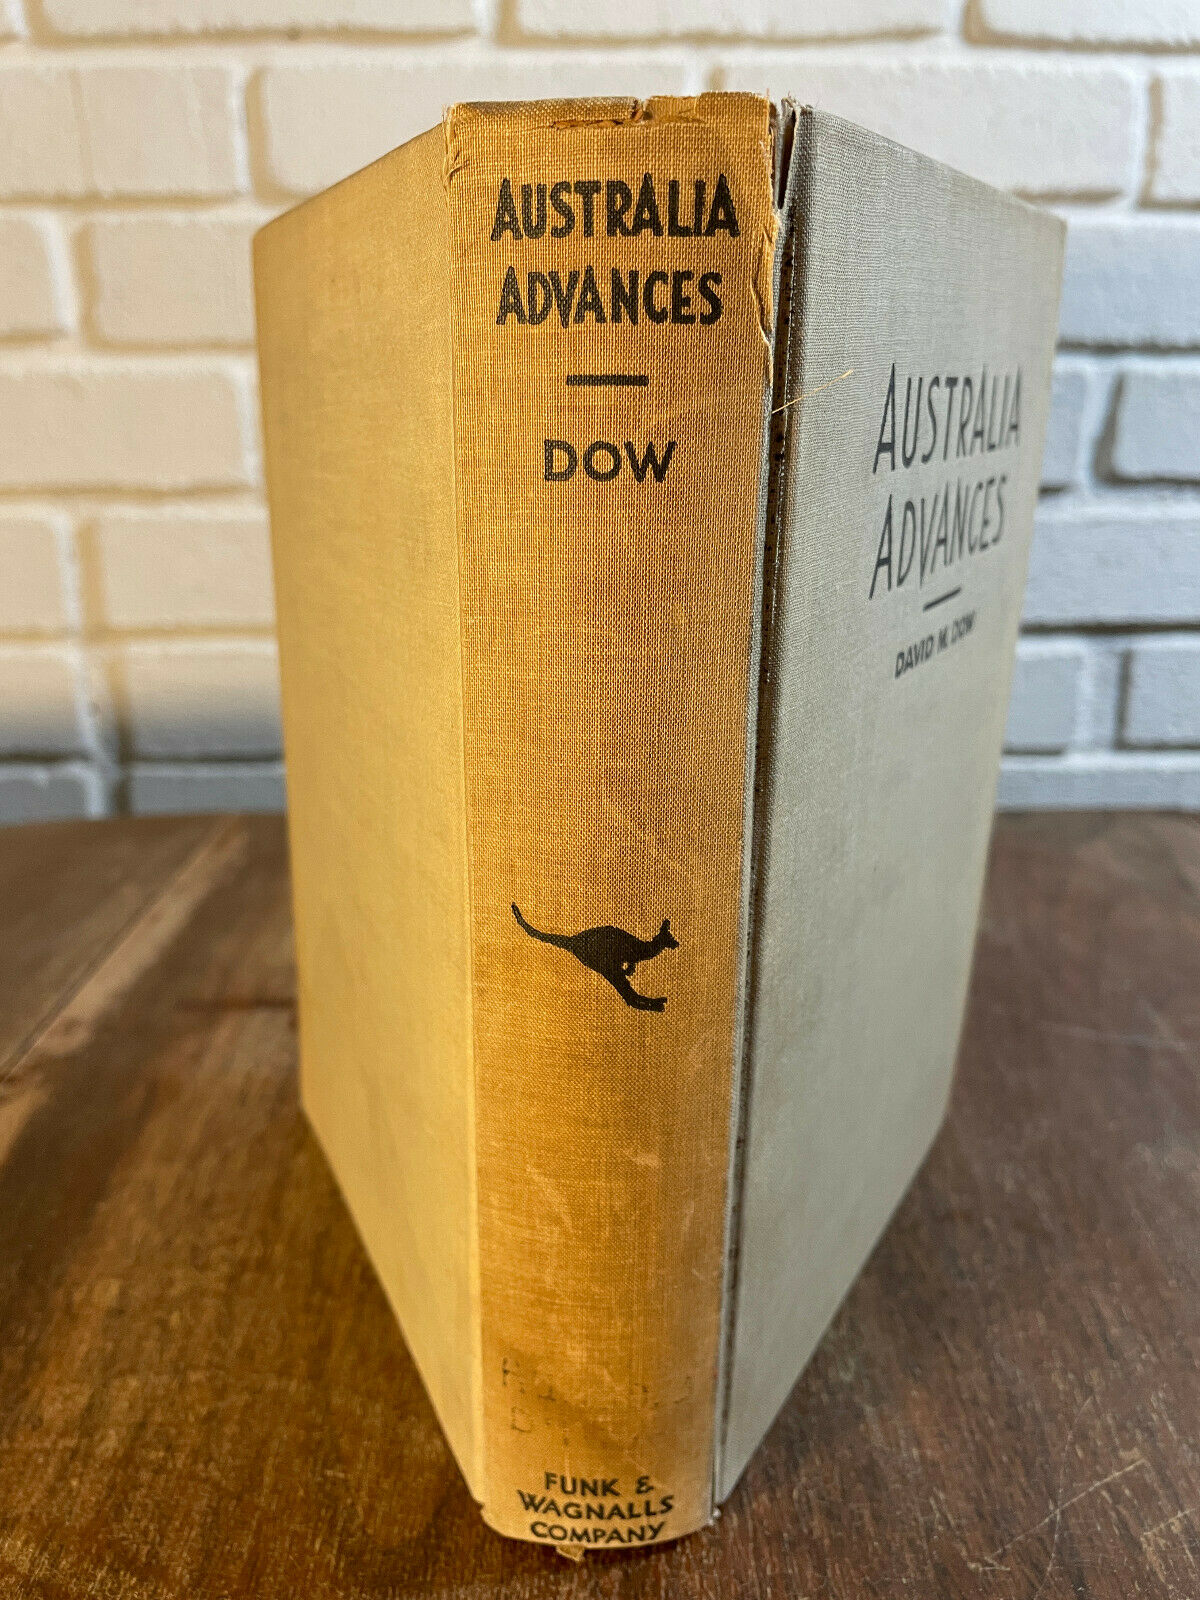 Australia Advances by David M. Dow 1st Edition 1938 (W3)